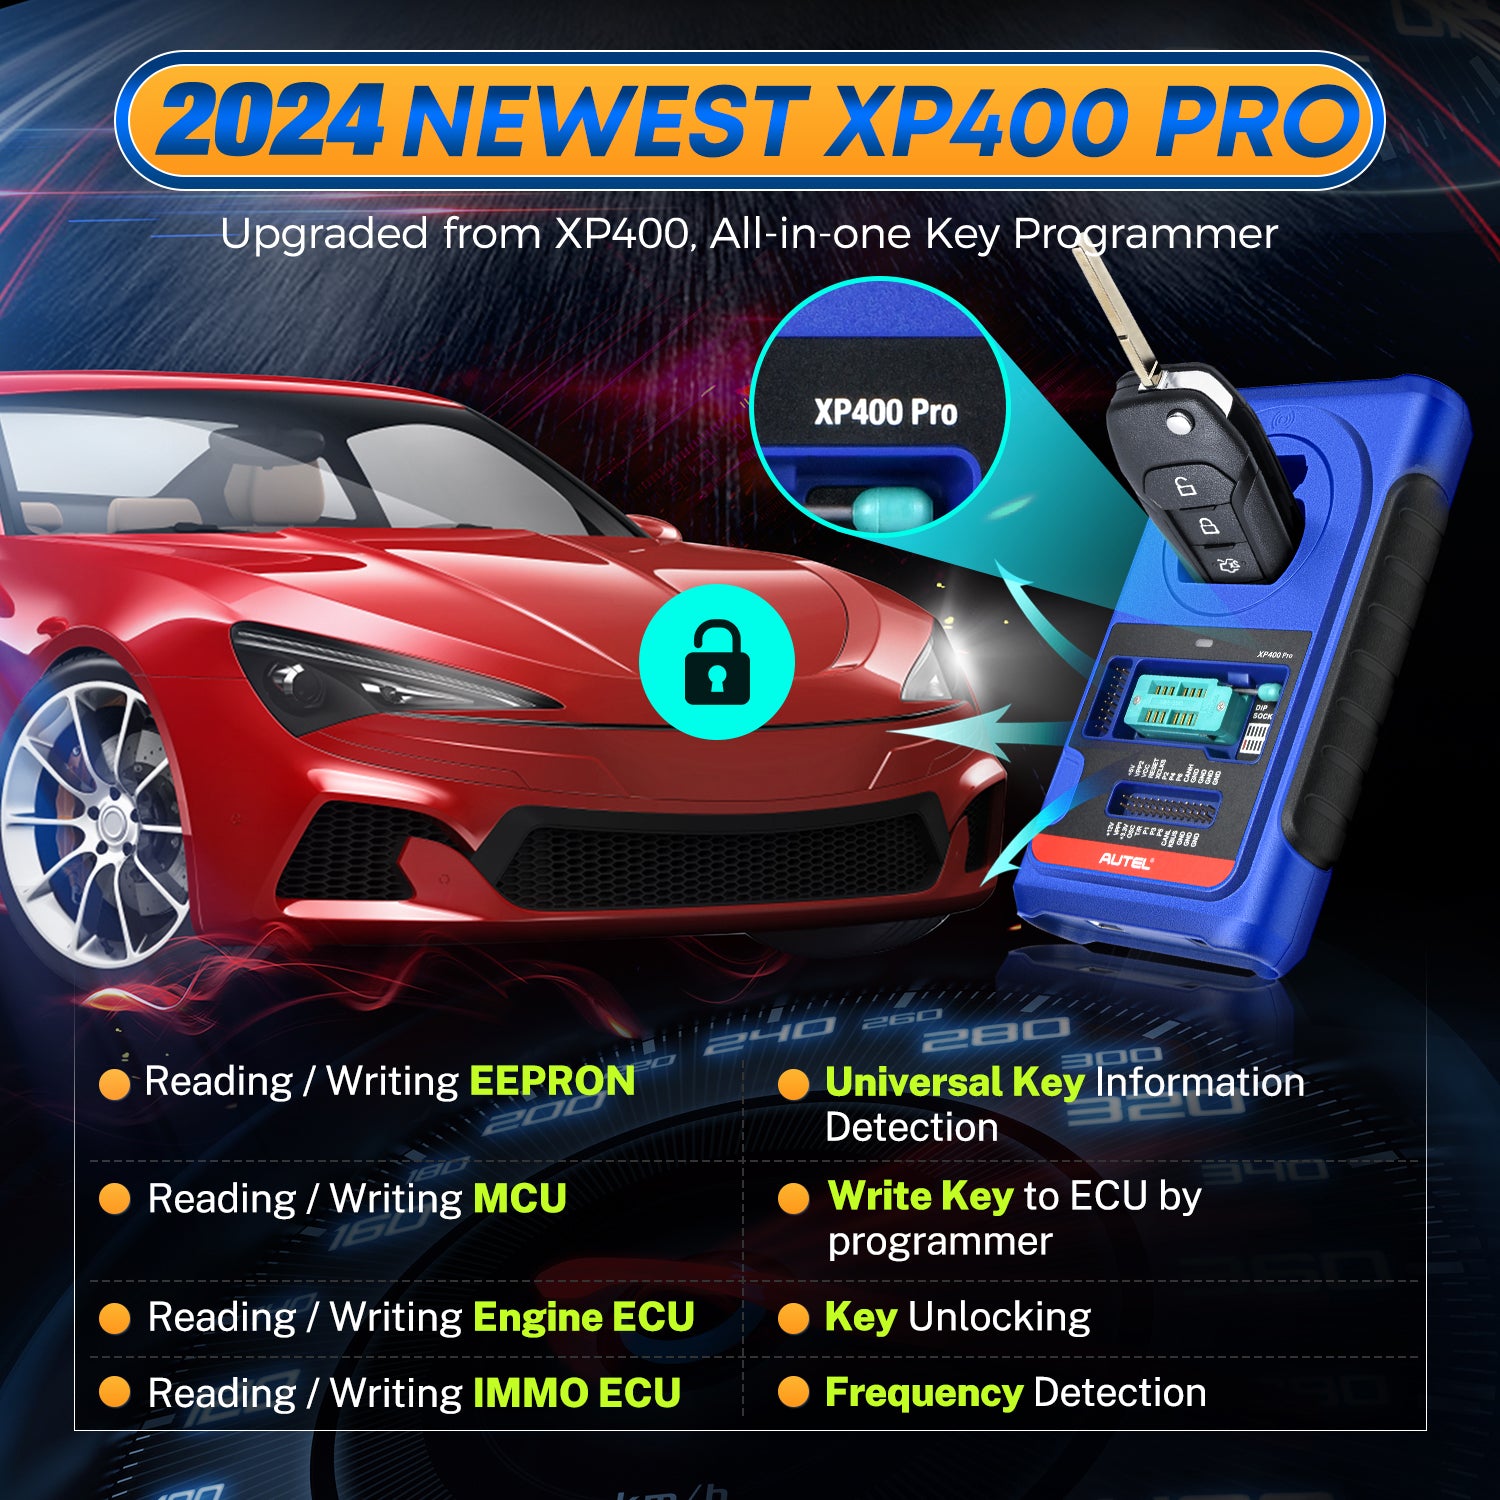 IM608S II with XP400 Pro